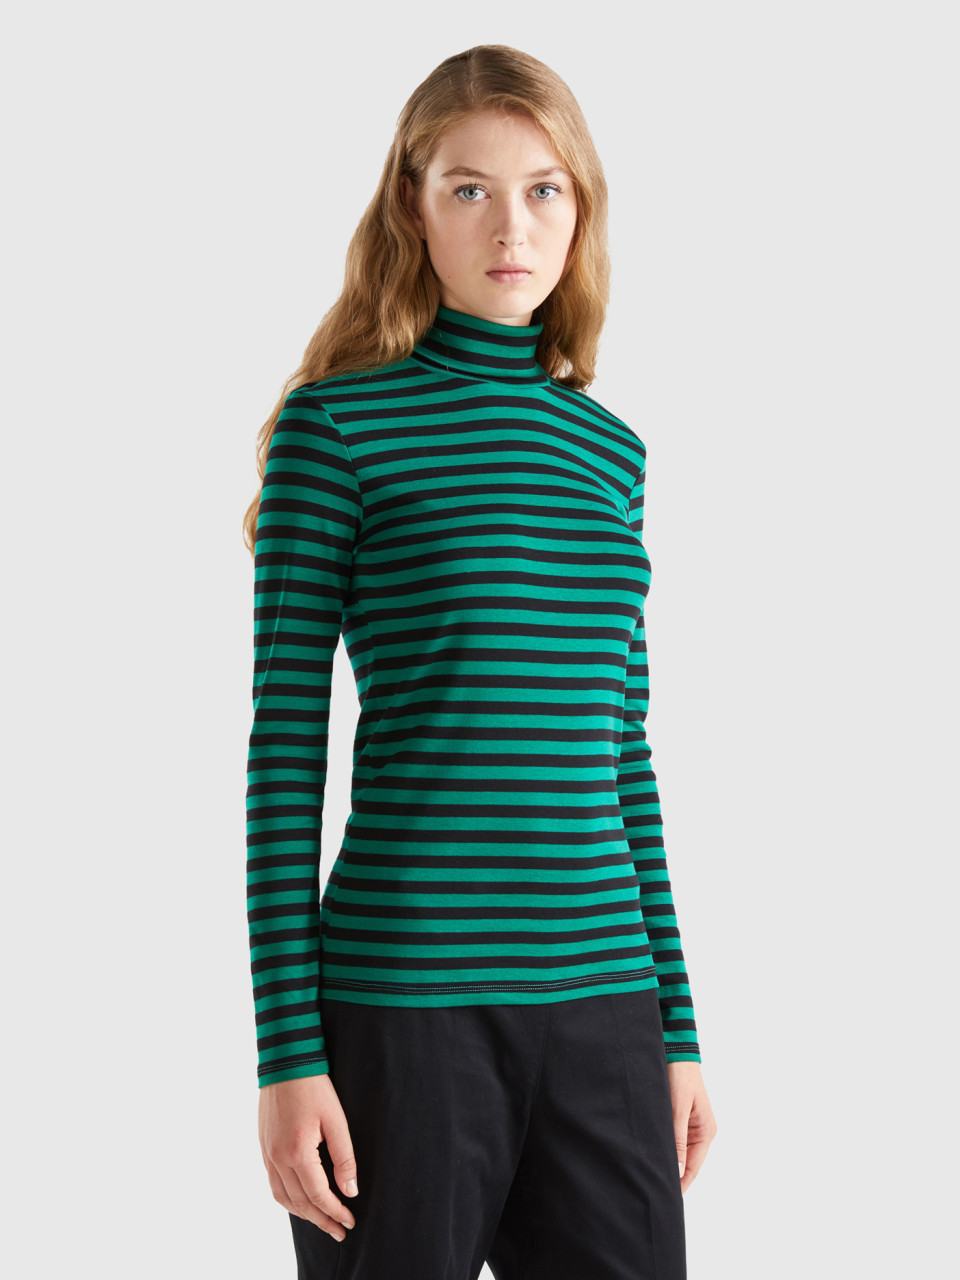 Benetton, Striped Turtleneck T-shirt, Green, Women